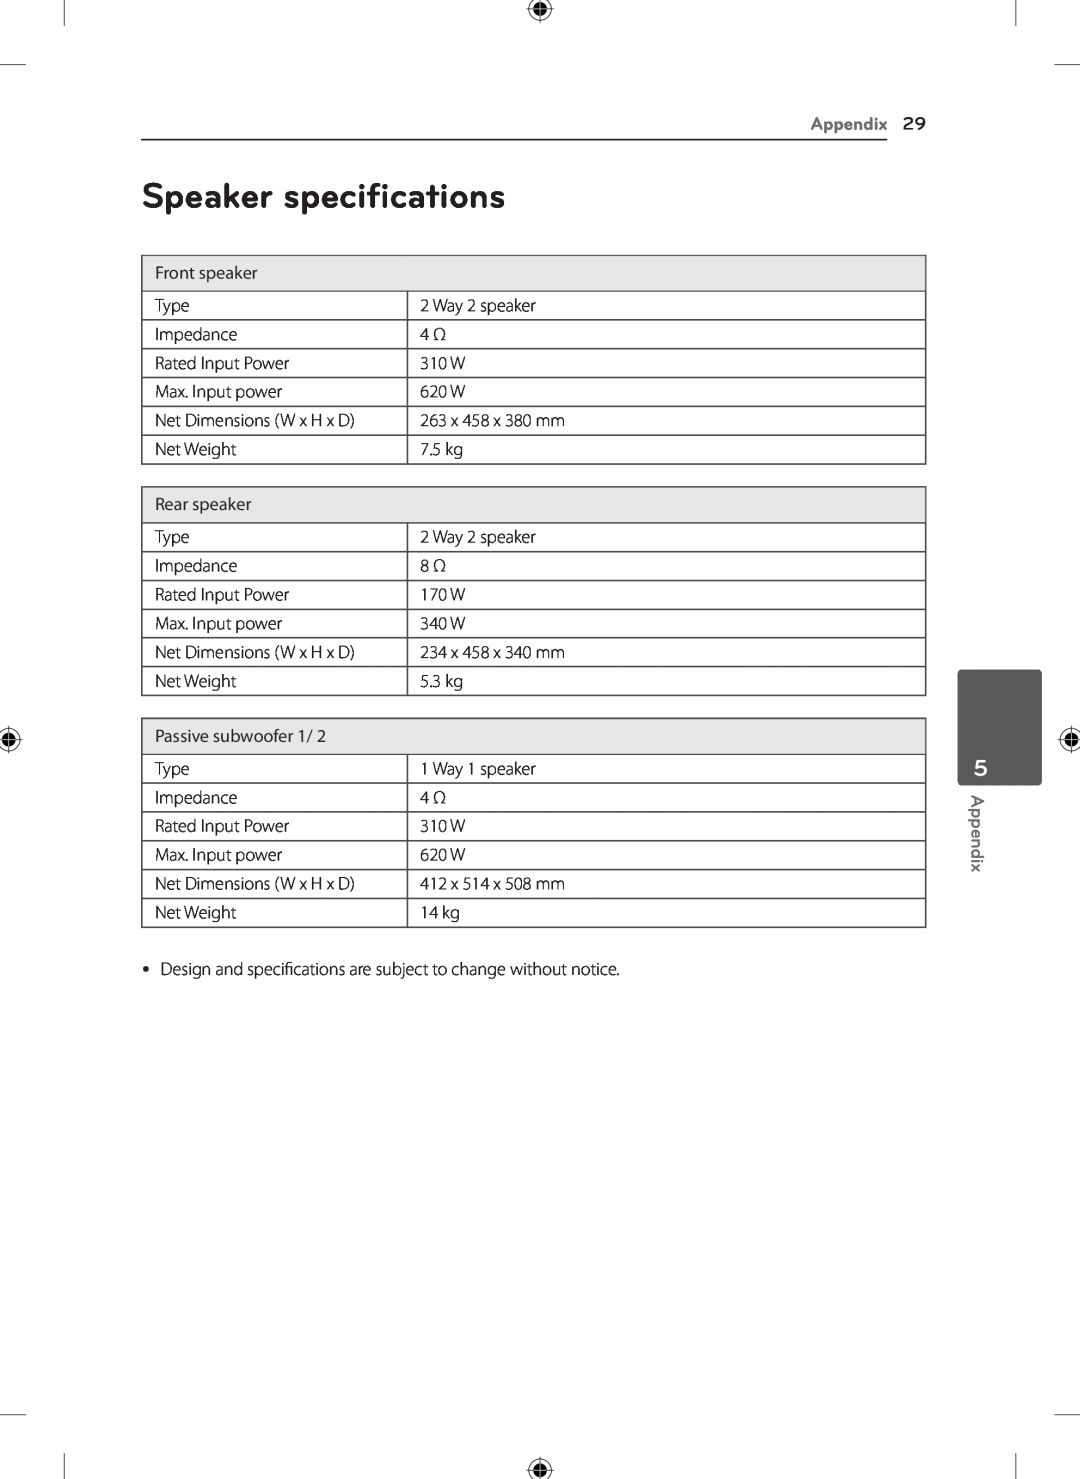 LG Electronics KSM1506 owner manual Speaker speciﬁcations, Appendix 